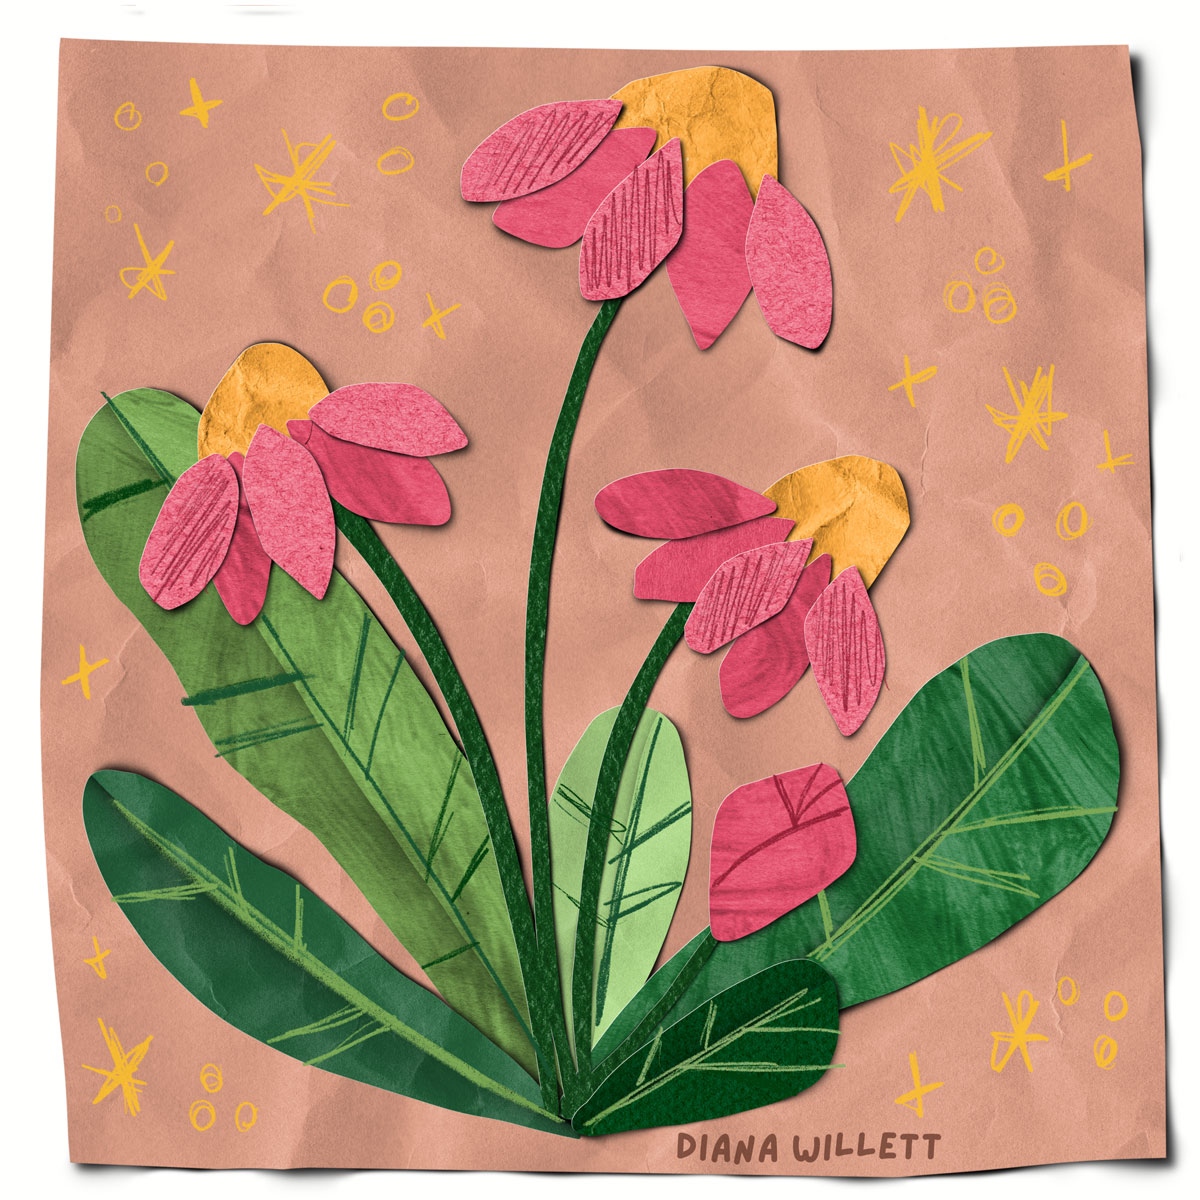 Kidlit Illustration by Diana Willett of cut paper flowers